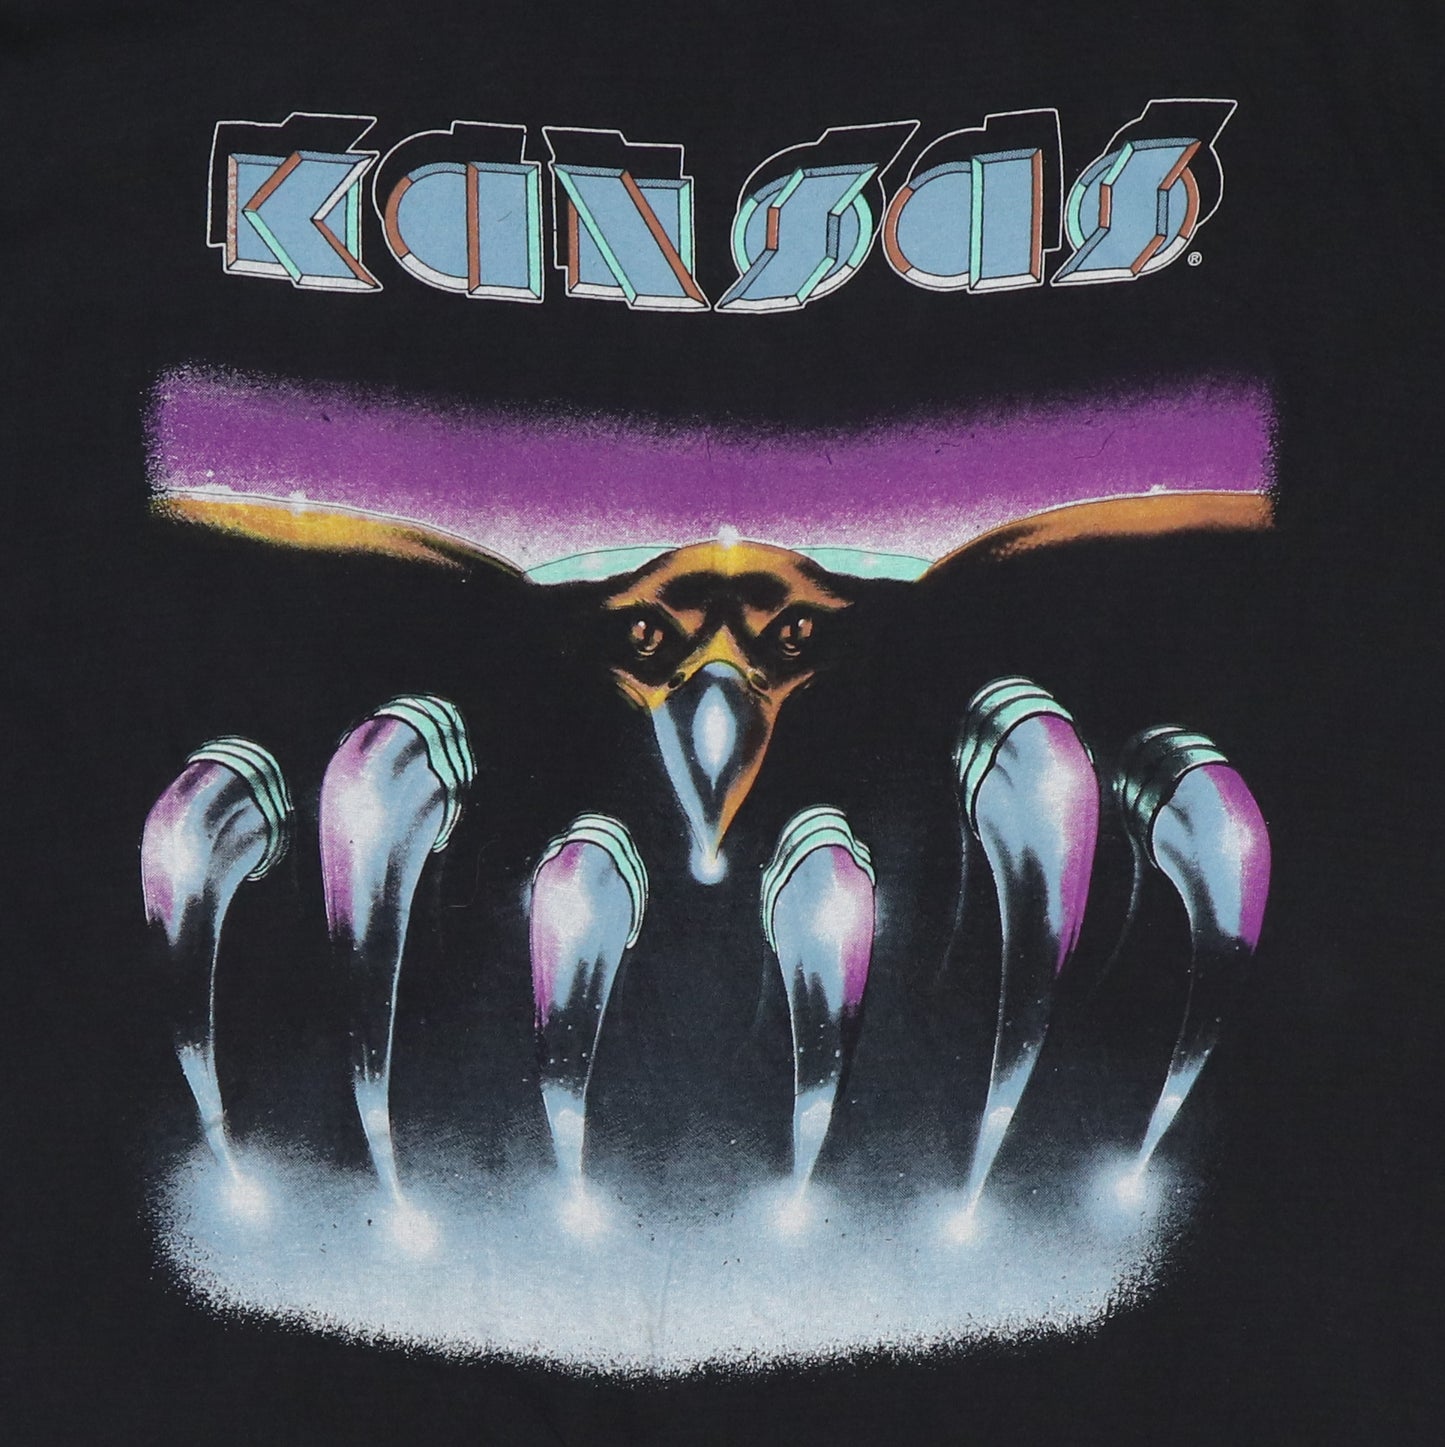 1991 Kansas Summer Tour Shirt